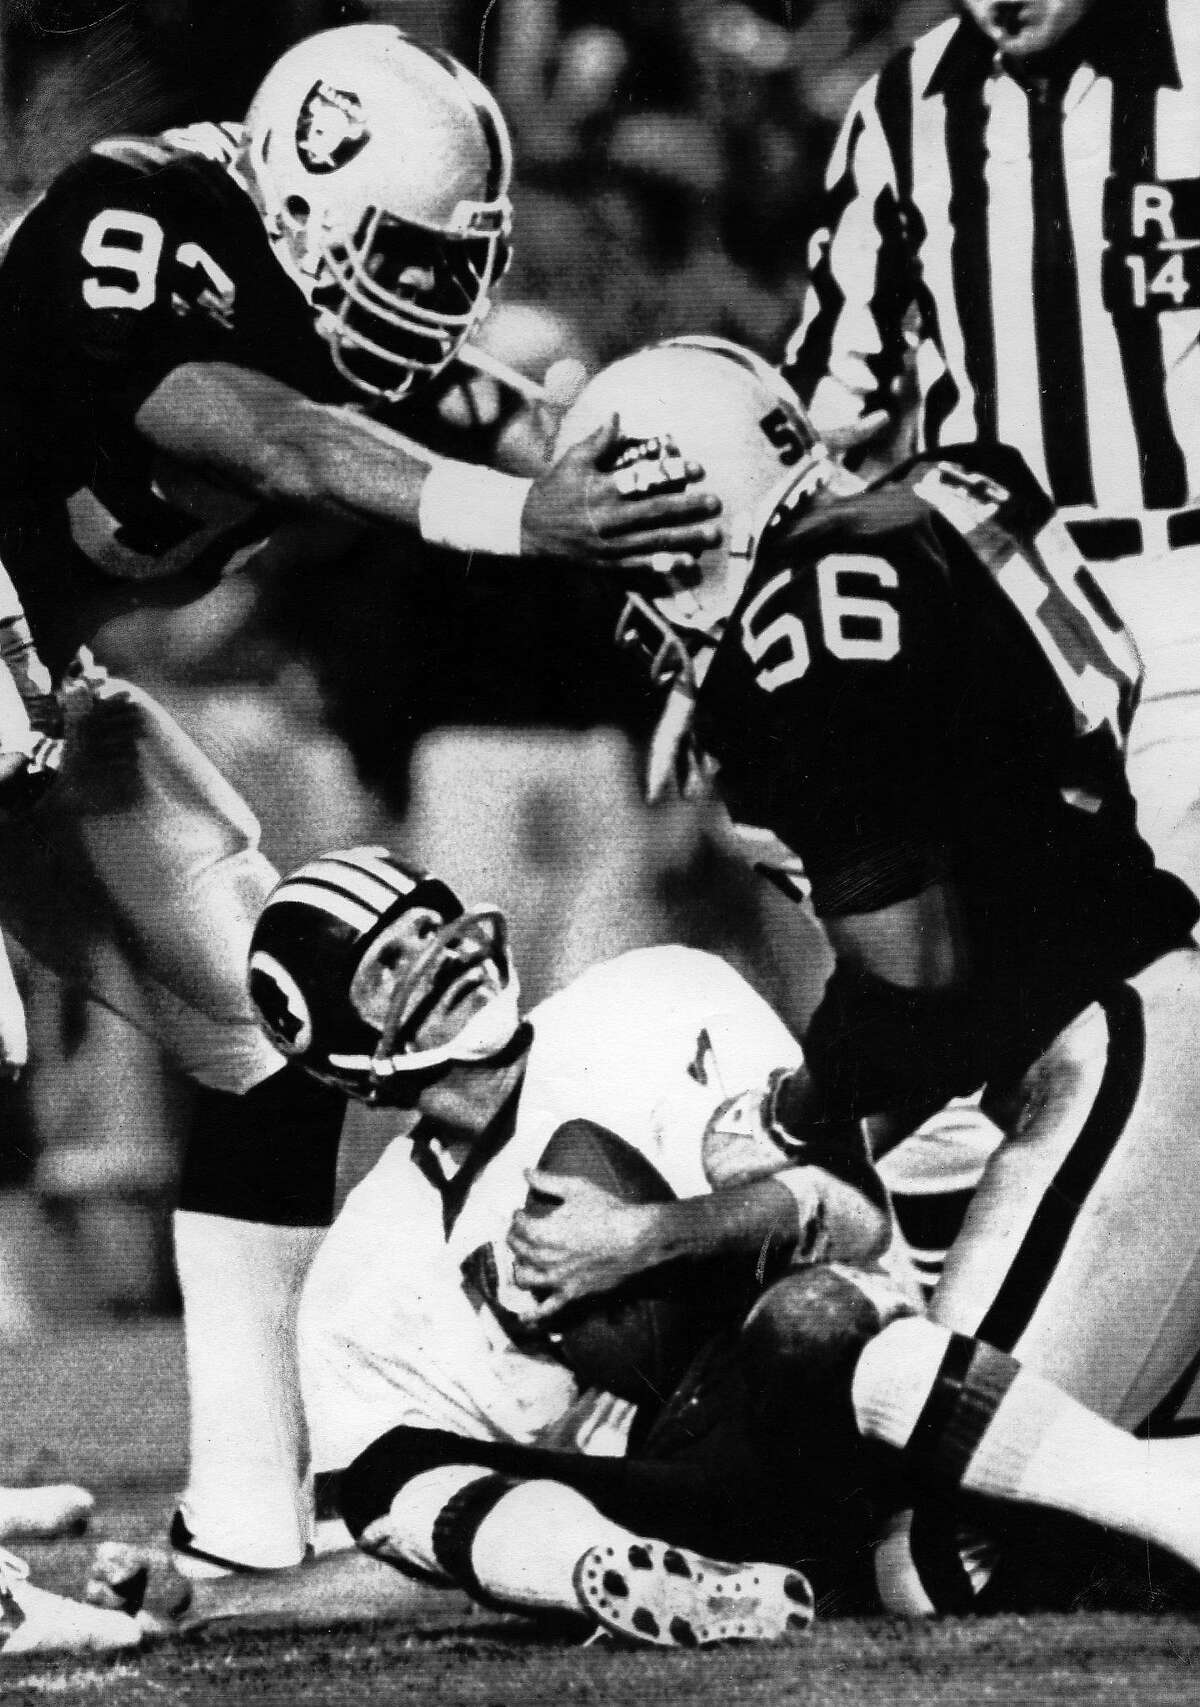 Los Angeles Raiders vs Washington Redskins in Super Bowl XVIII .. Jeff Barnes sacks quarterback Joe Theisman. Greg Townsend congratulates Barnes. UPI photo Photo ran1/23/1984, P. 44